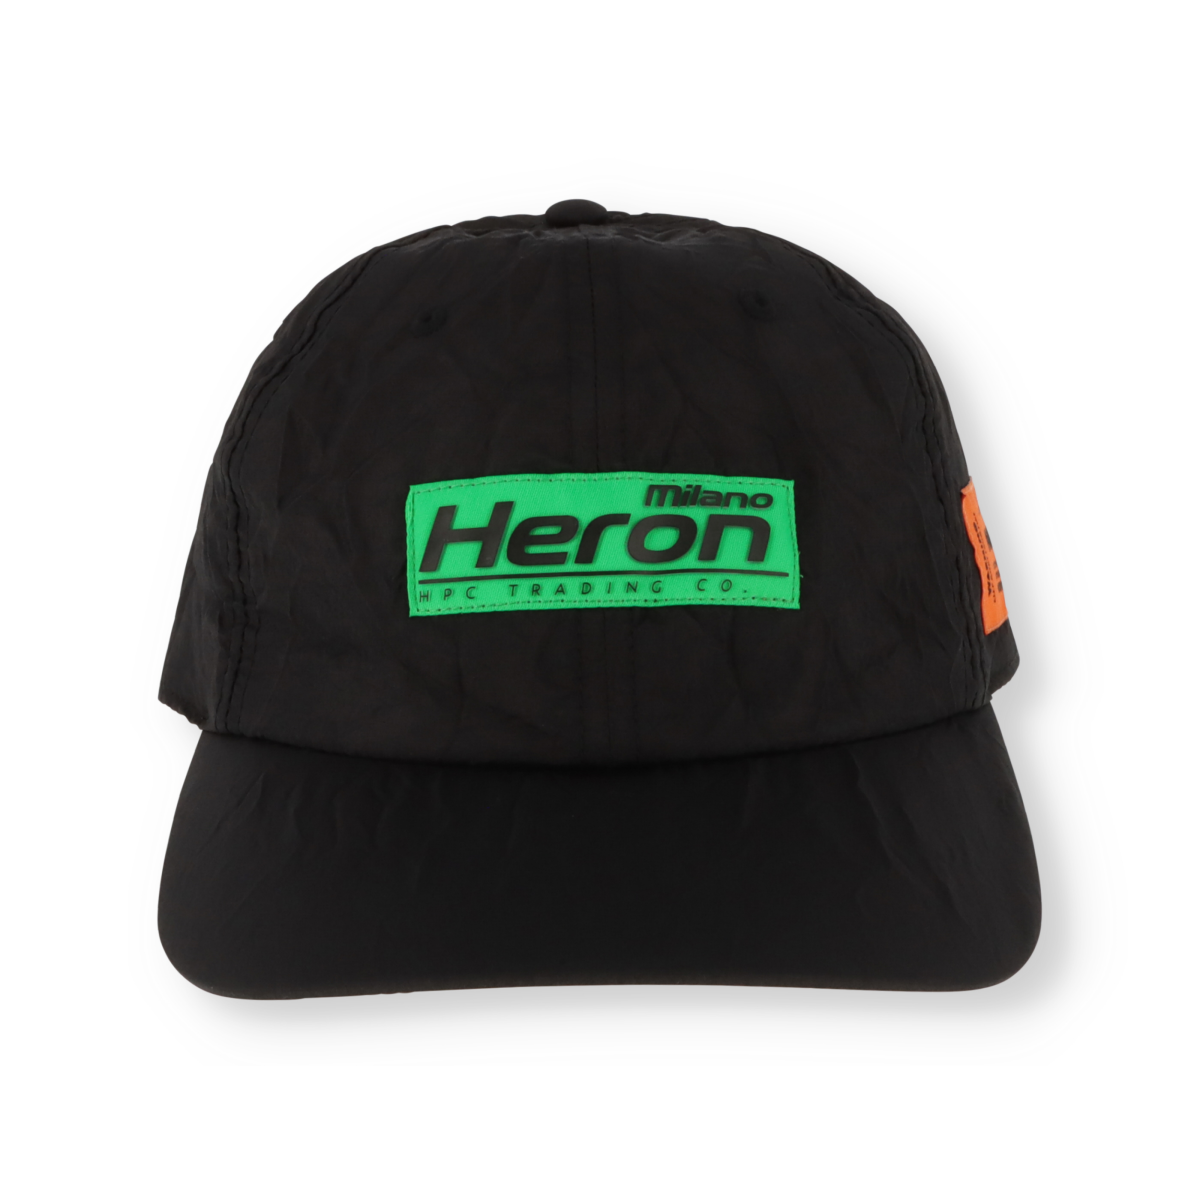 Heron Preston Cap